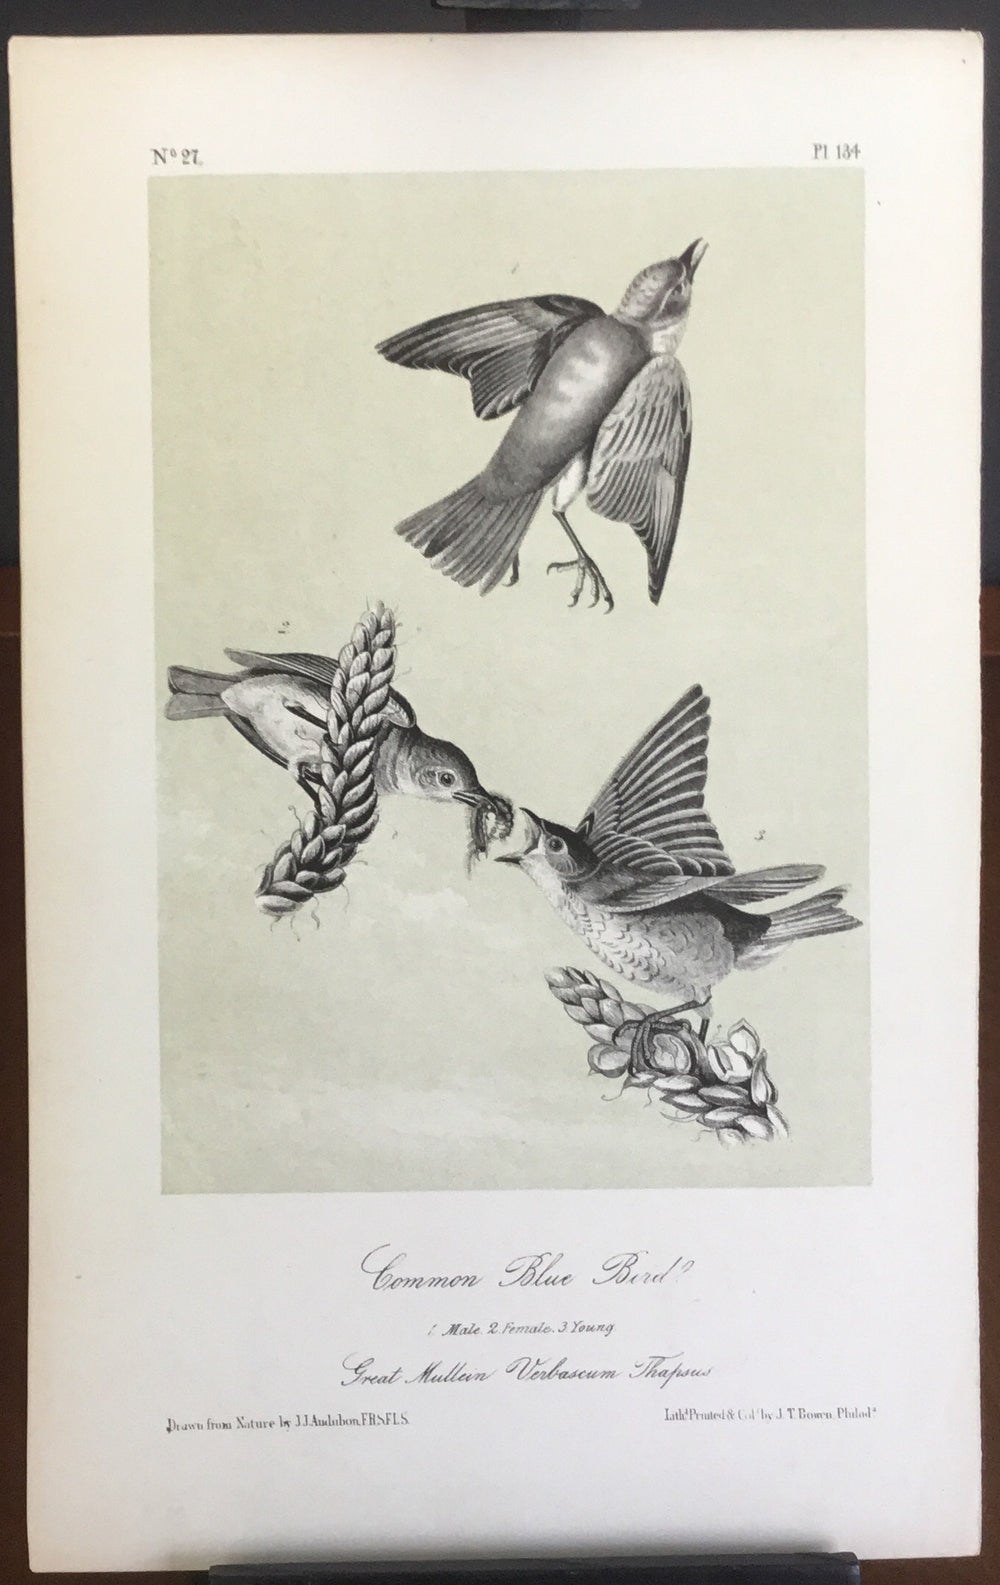 Audubon Octavo Common Bluebird, plate 134, uncolored test sheet, 7 x 11